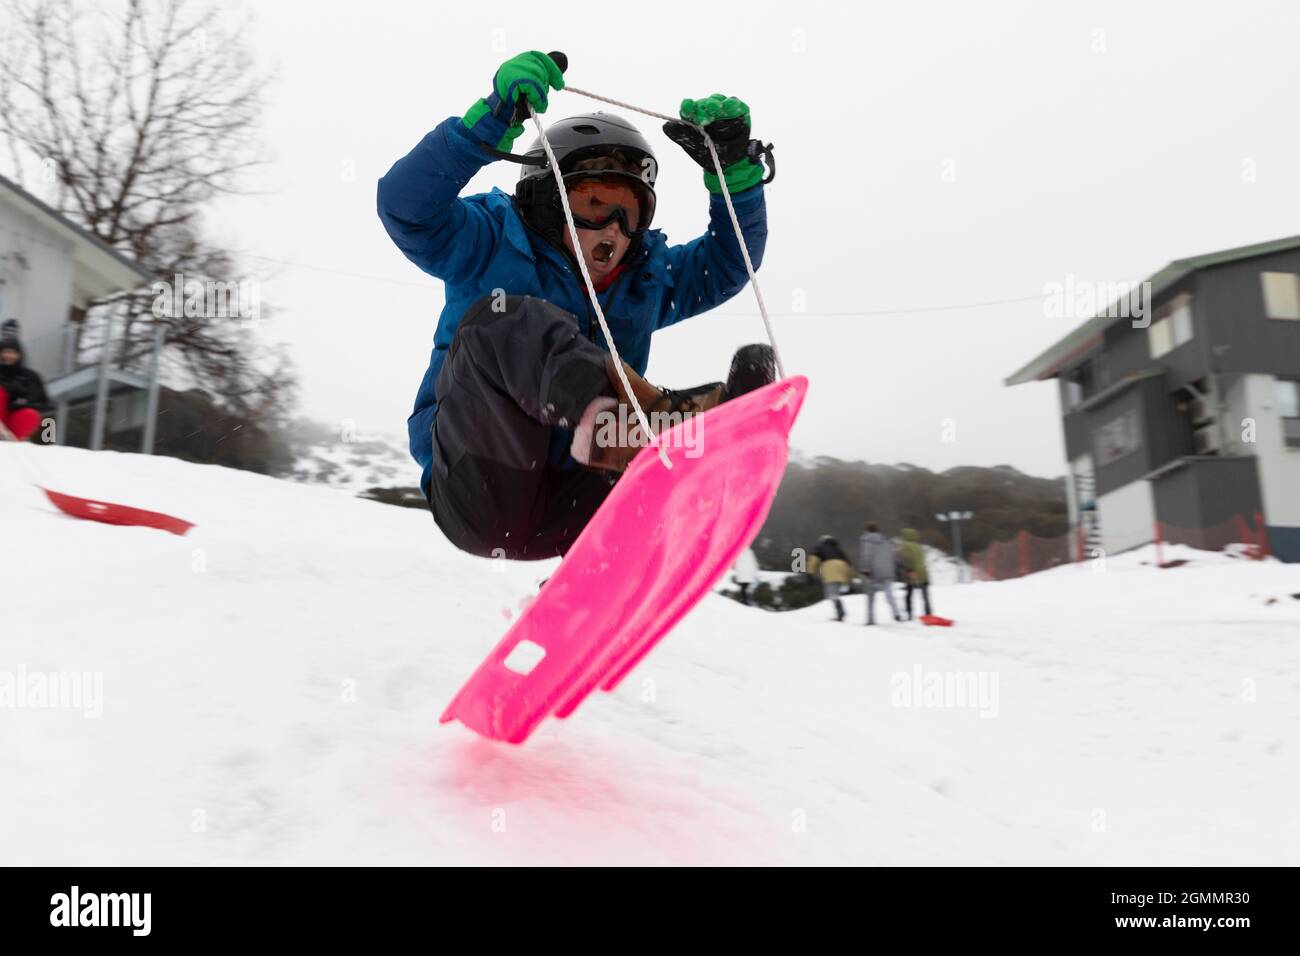 Boy sledding on snowy slope Stock Photo